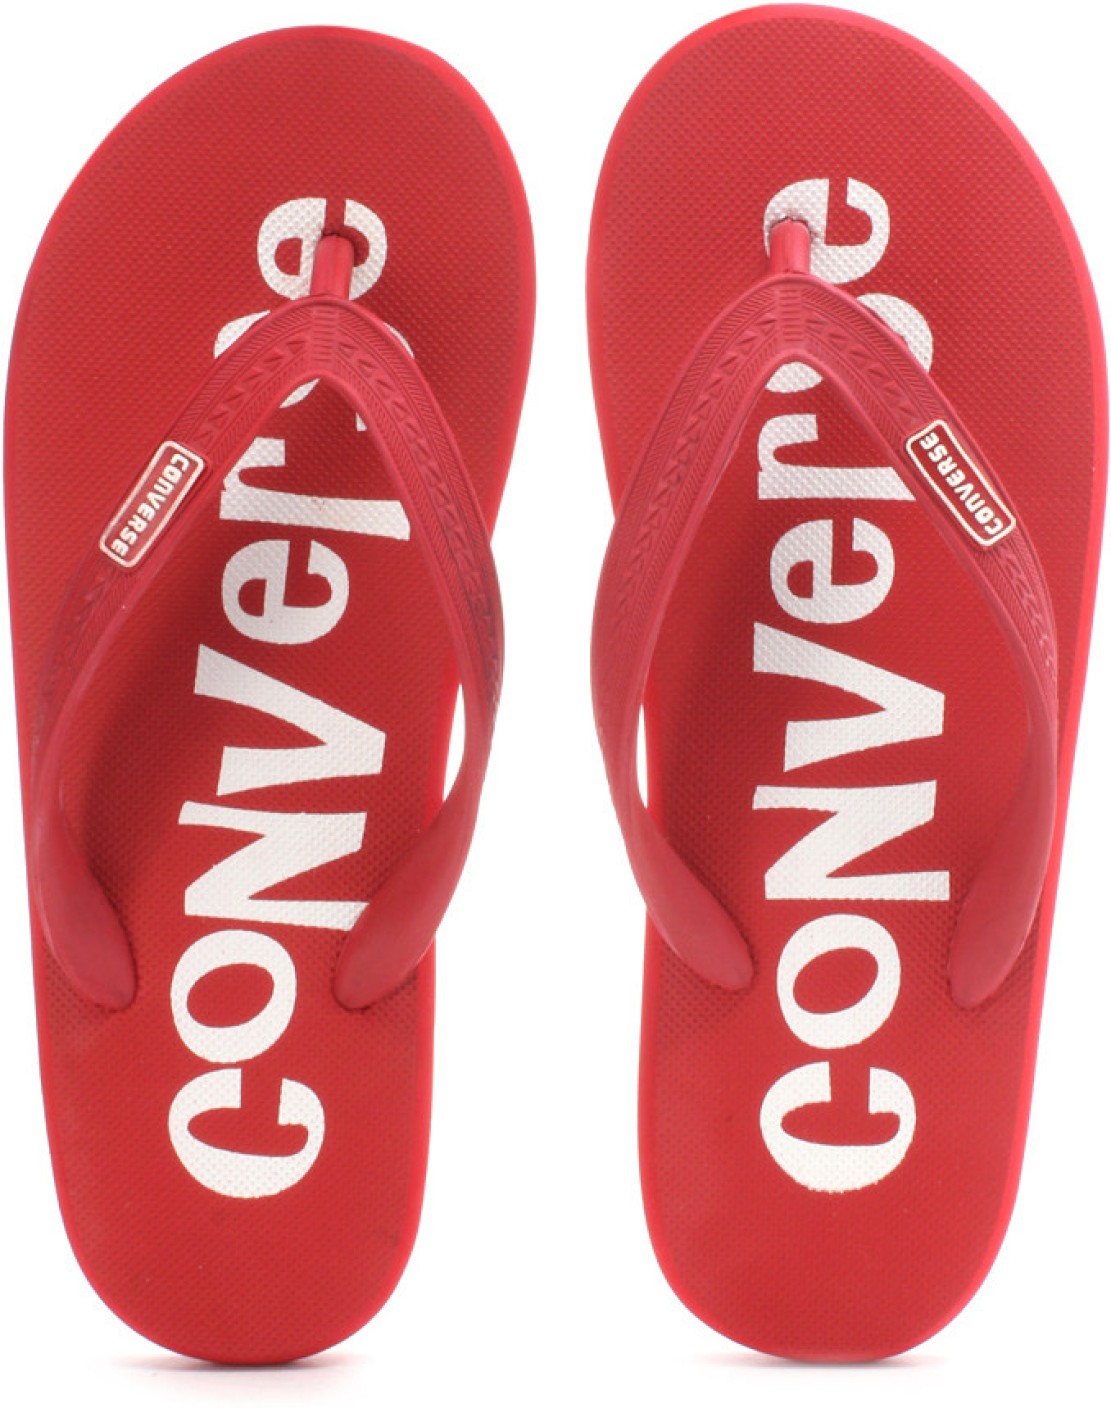 Converse Flip Flops - Buy Red Color Converse Flip Flops Online at Best ...